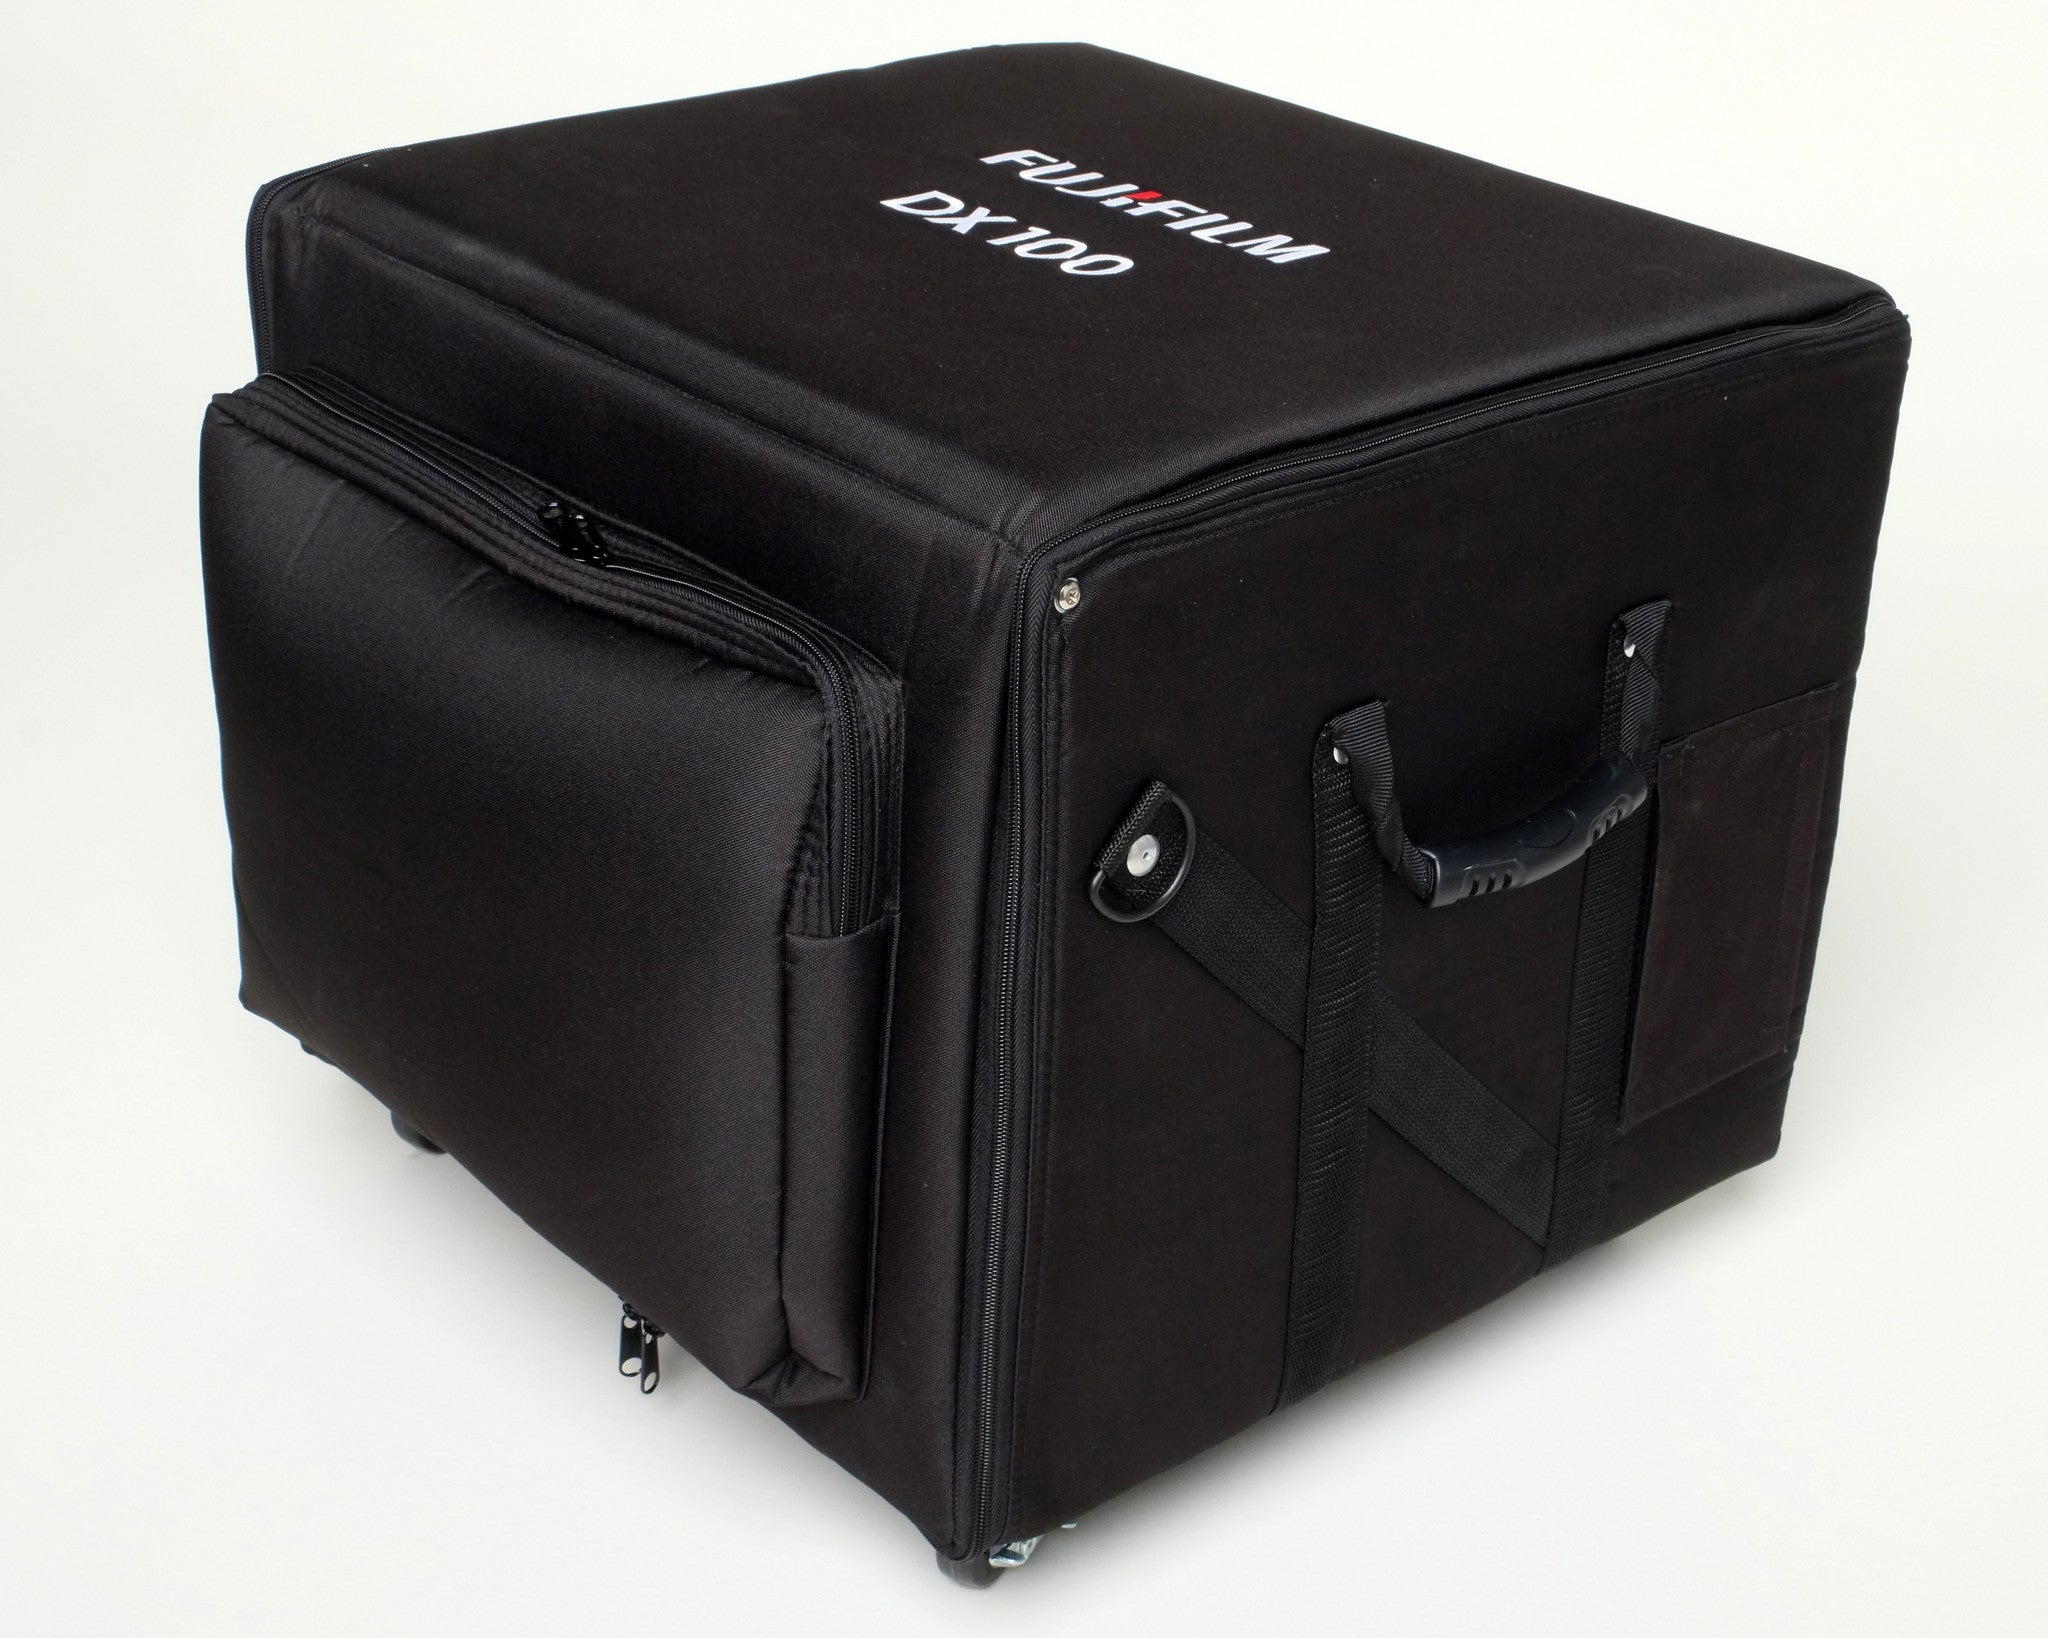 Fuji DX100 Roller Case, bags roller bags, Fujifilm - Pictureline 